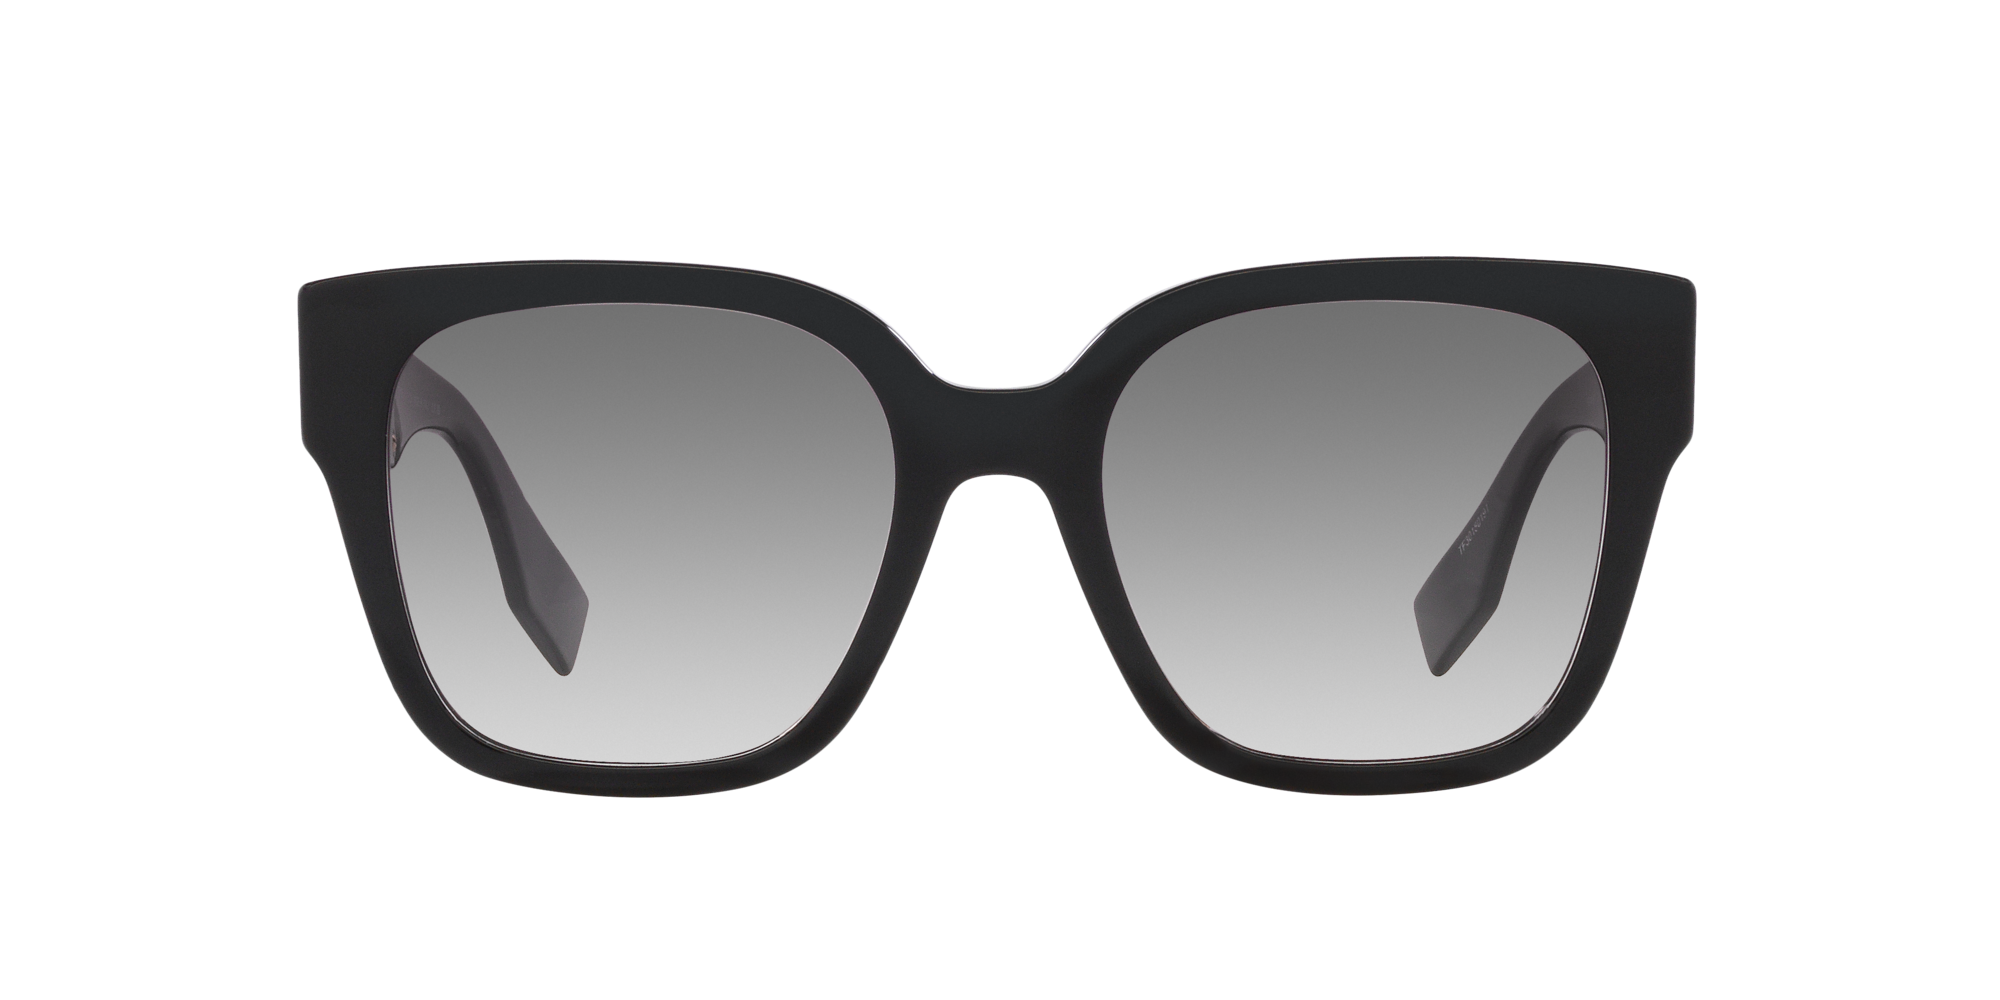 Women's Sunglasses - Luxury & Designer Sunglasses | Sunglass Hut® |  Sunglasses women, Luxury sunglasses, Sunglasses